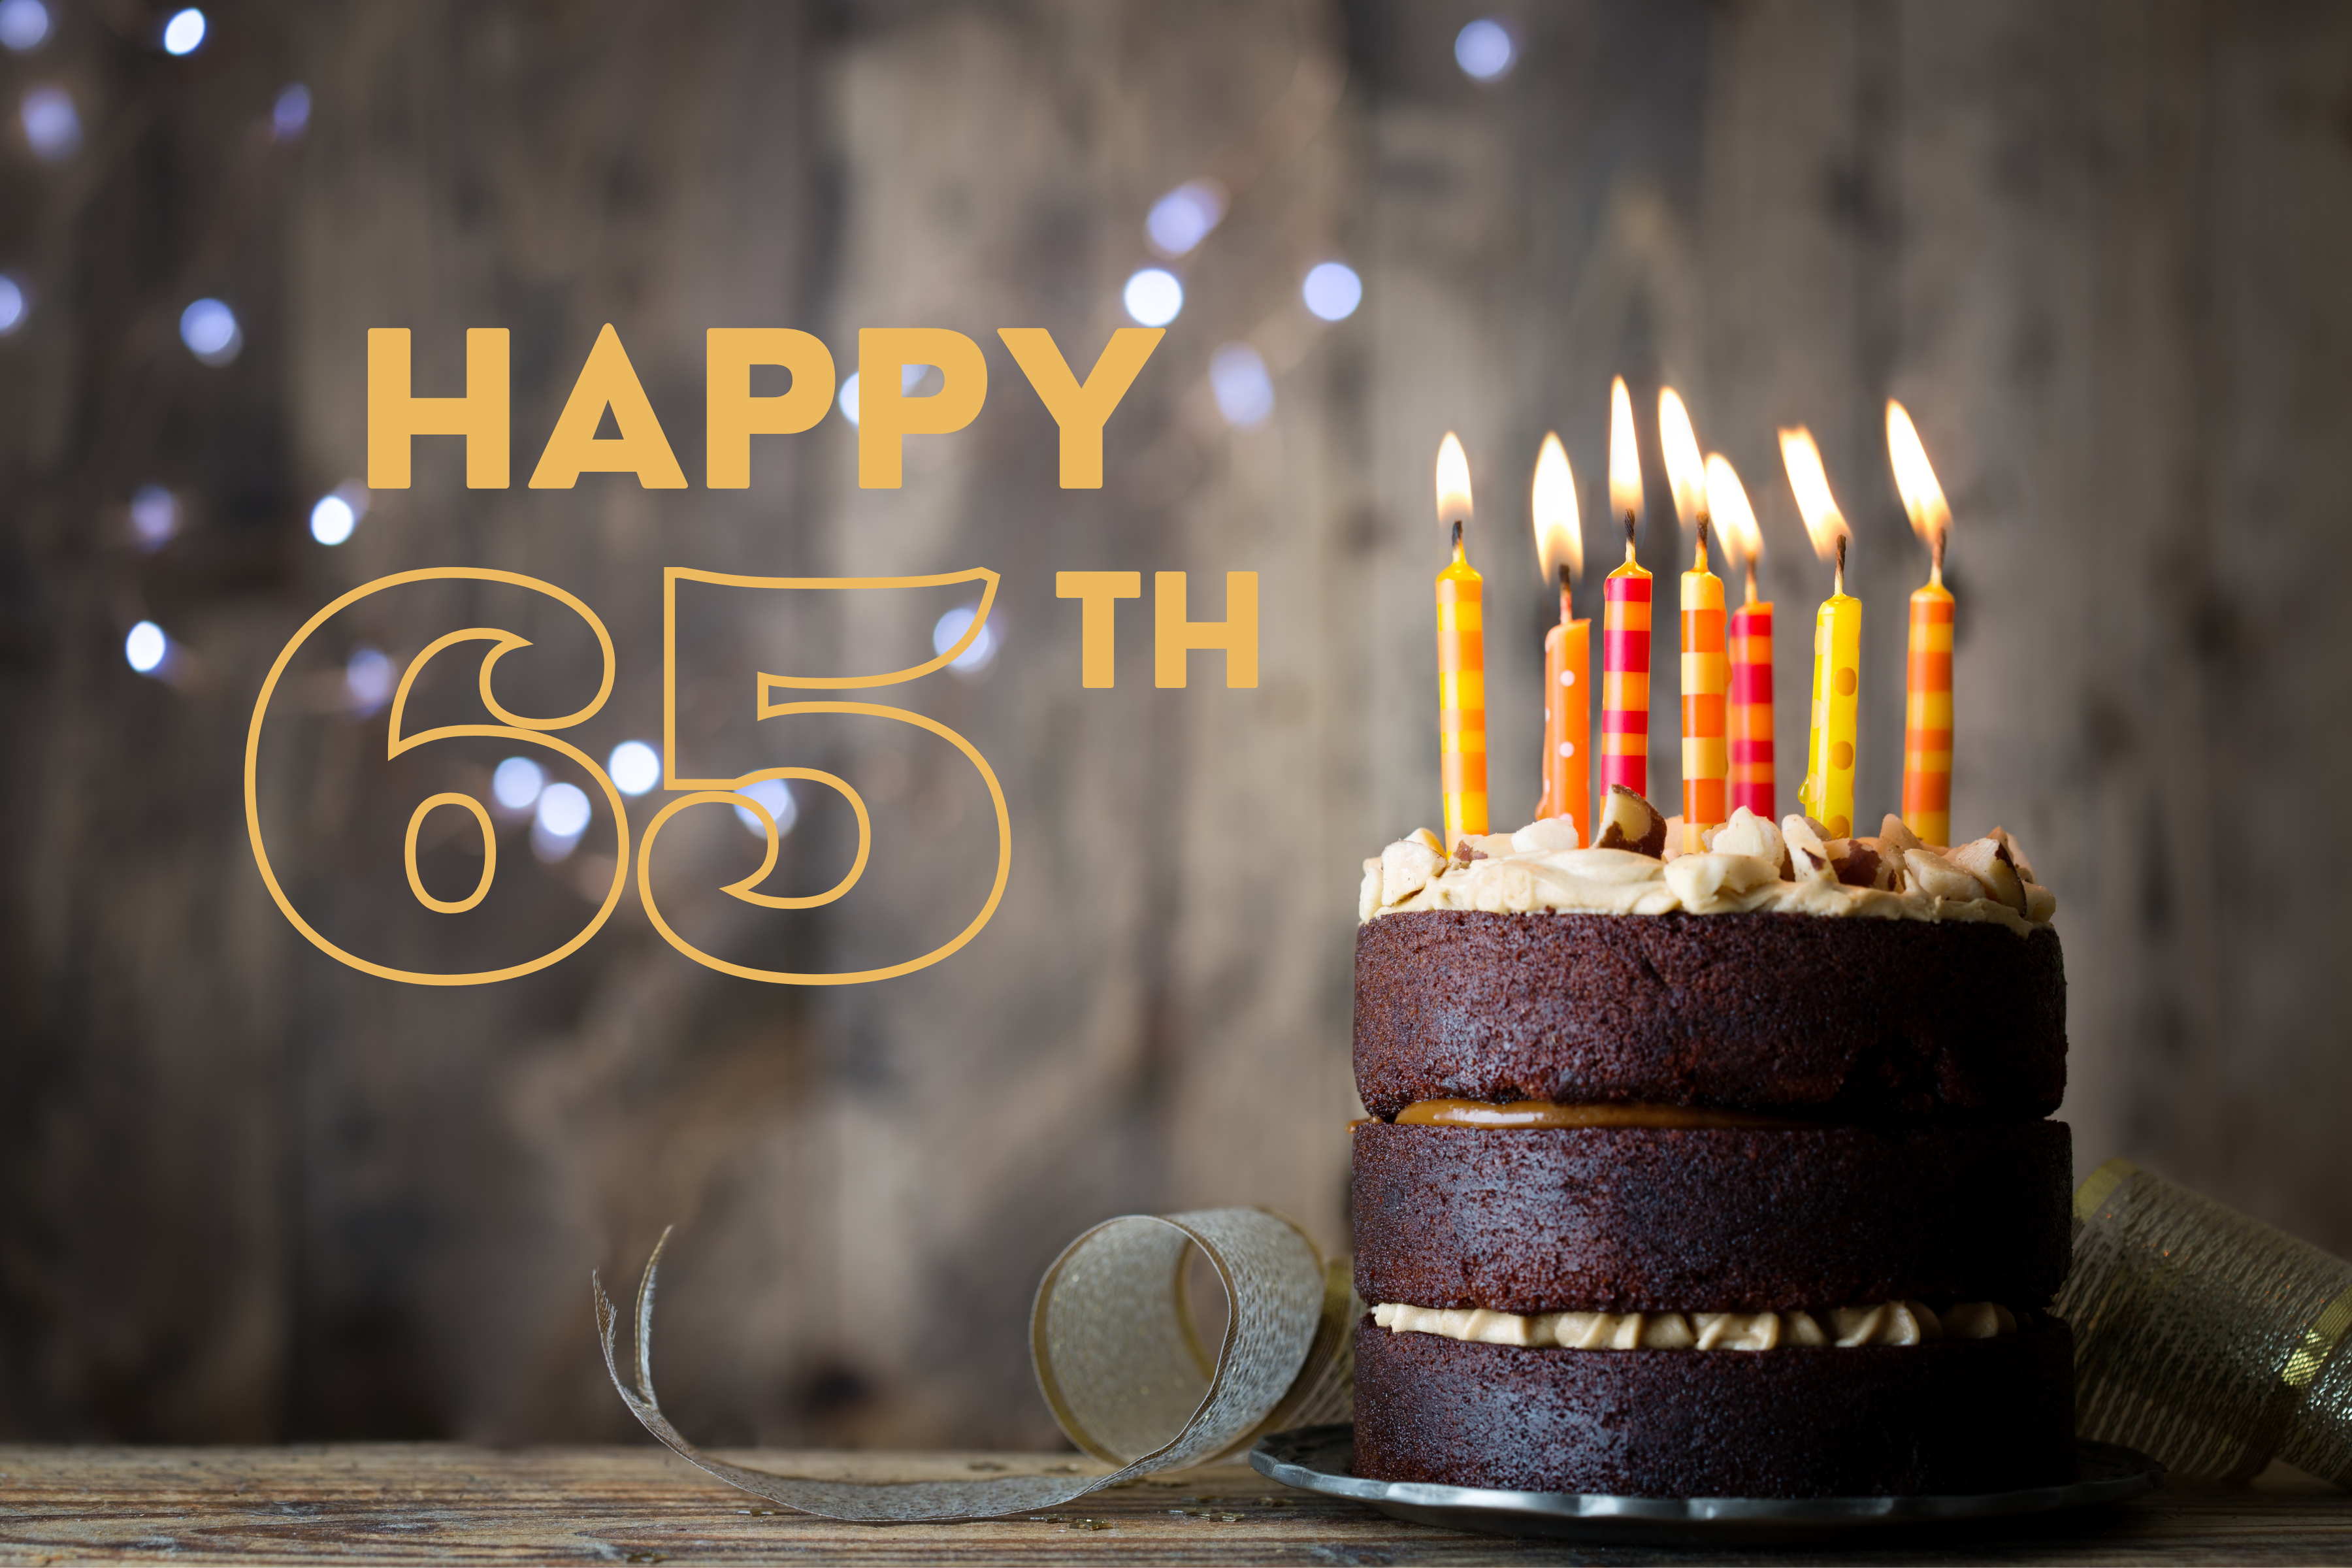 birthday cake for seniors turning 65 years old